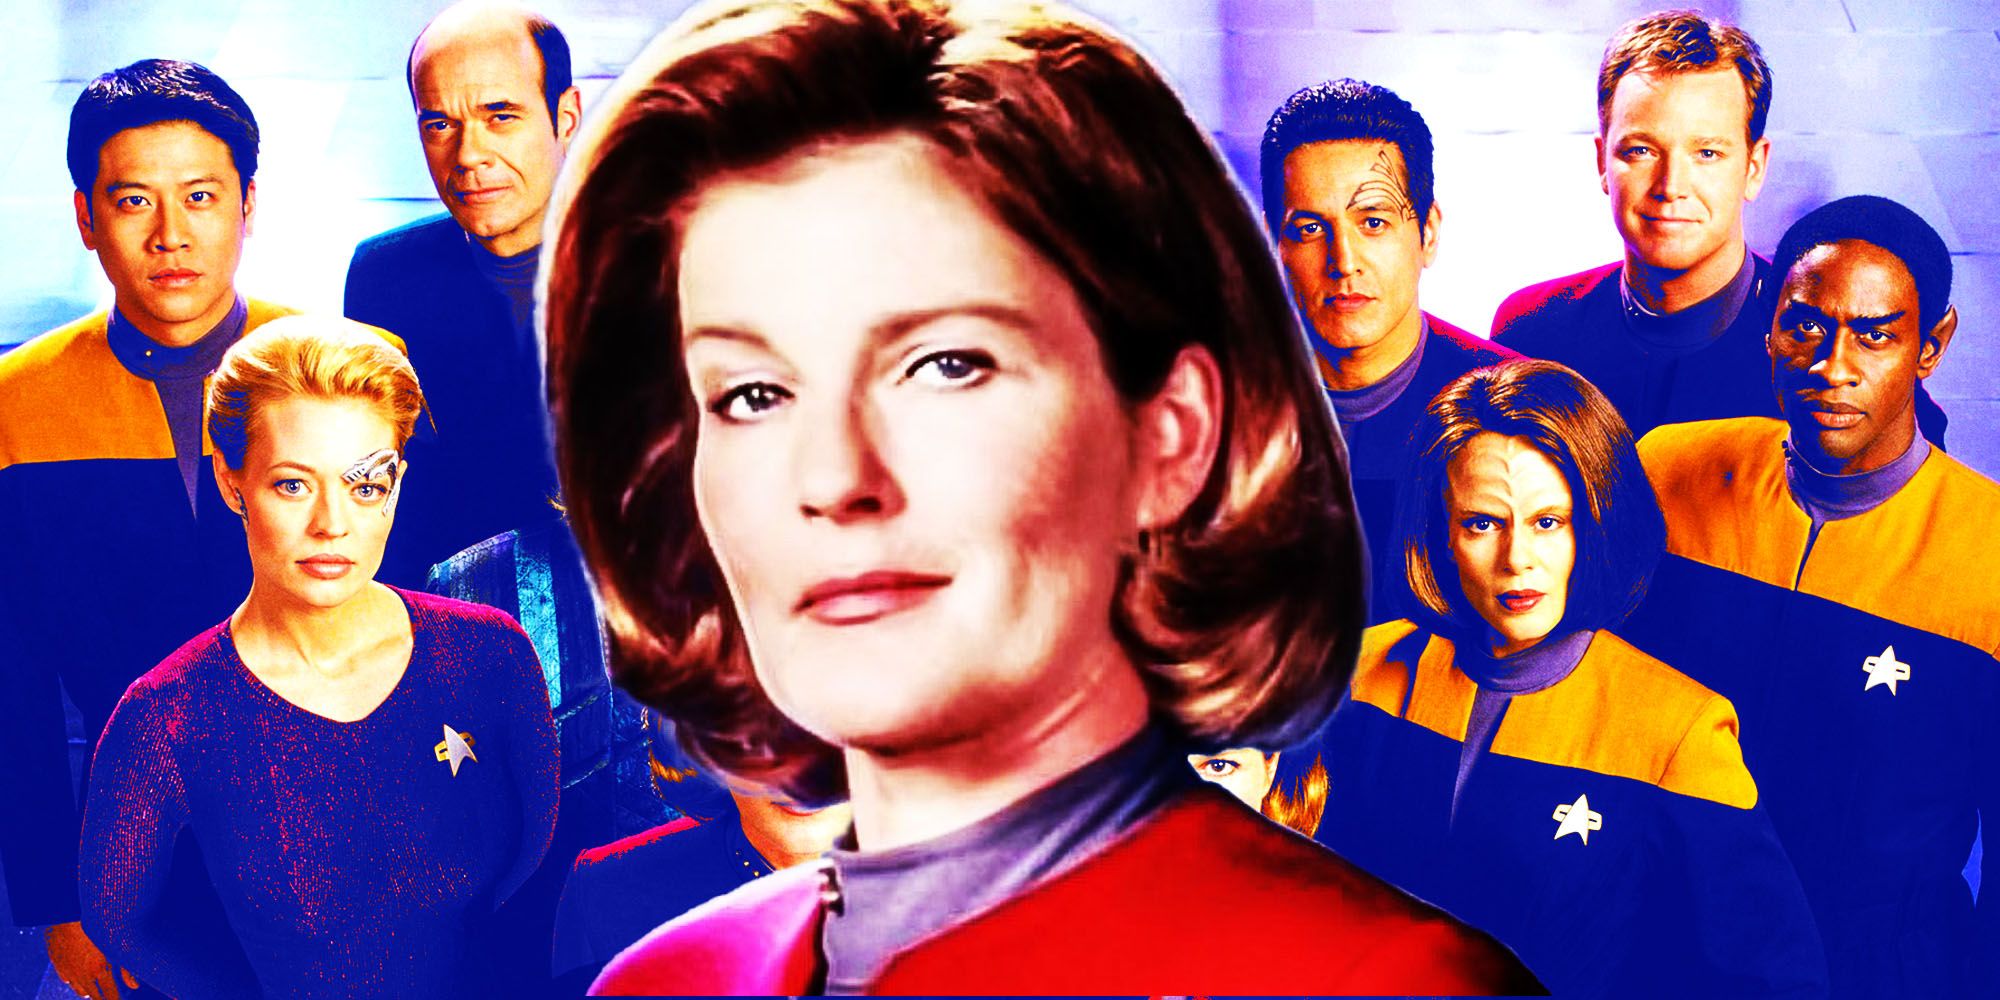 The Star Trek: Voyager cast.